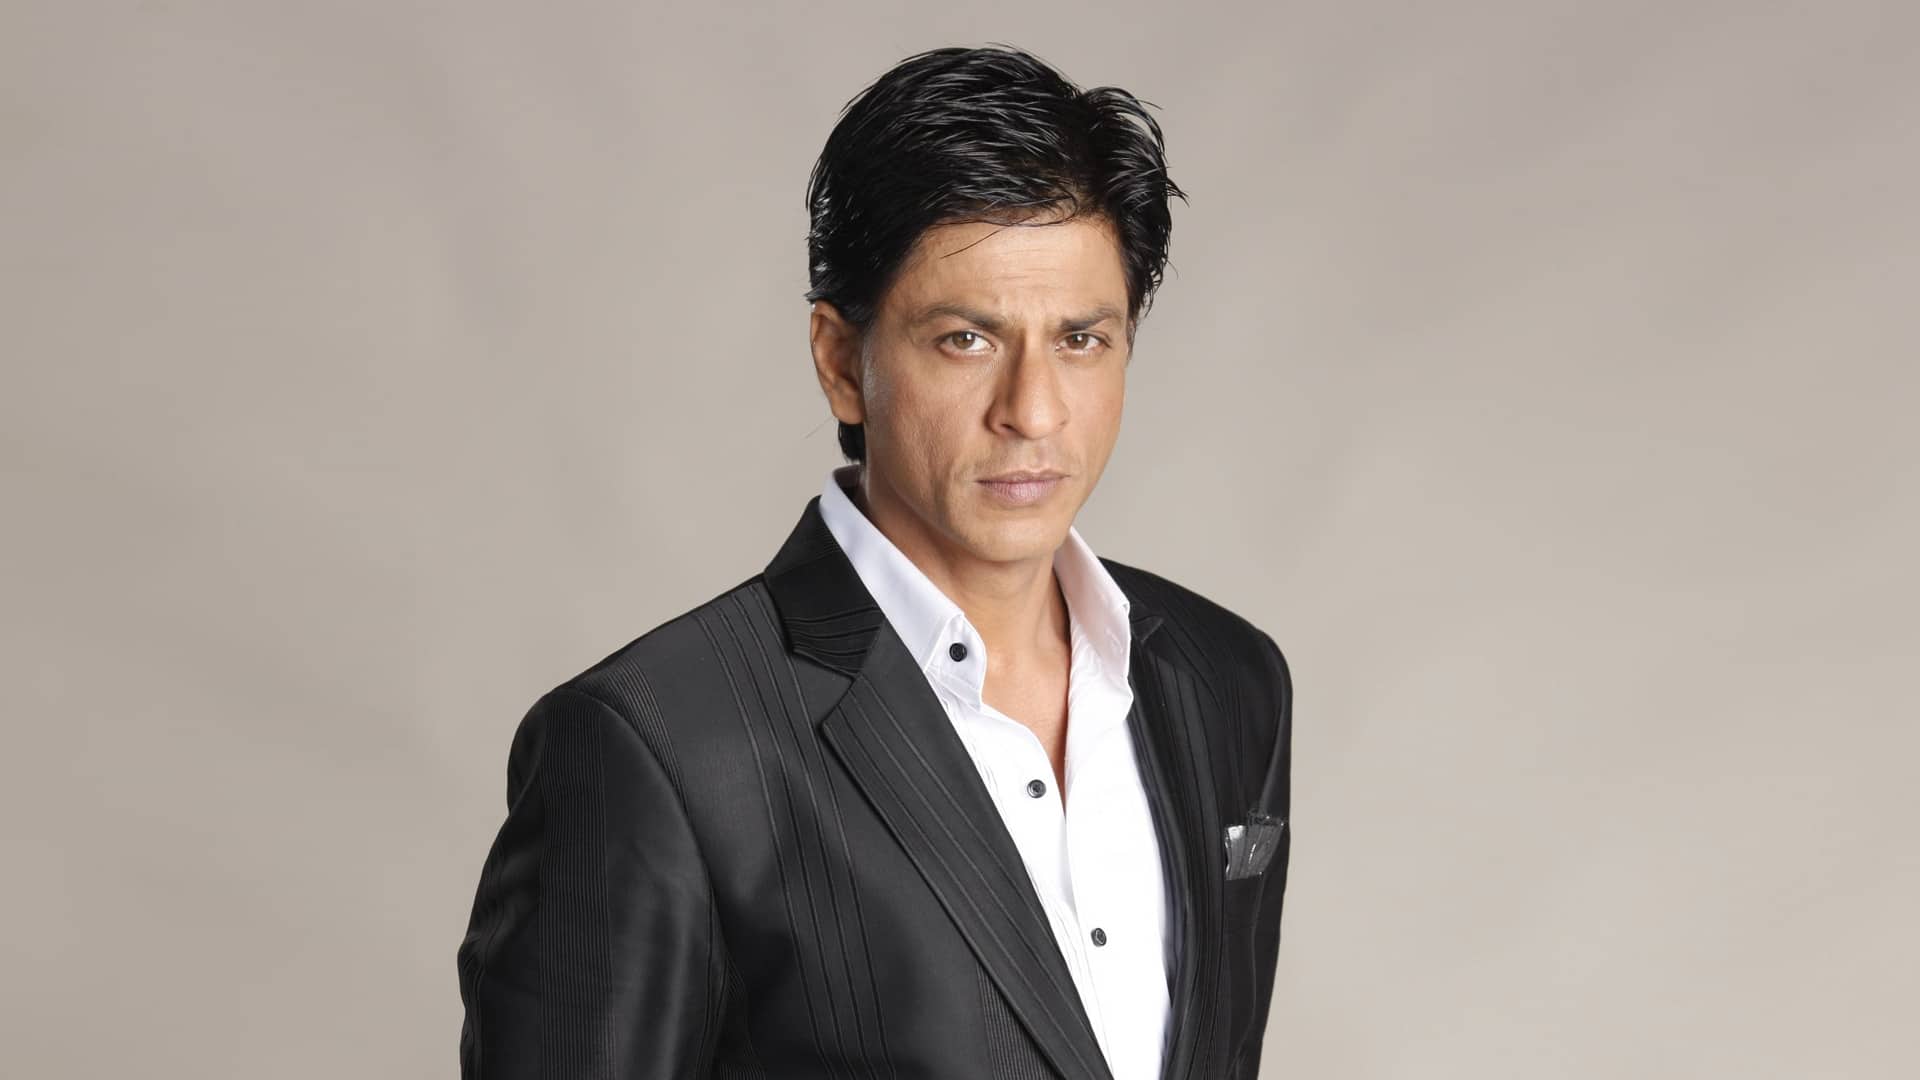 10 Top Rated Movies of Shah Rukh Khan according to IMDB